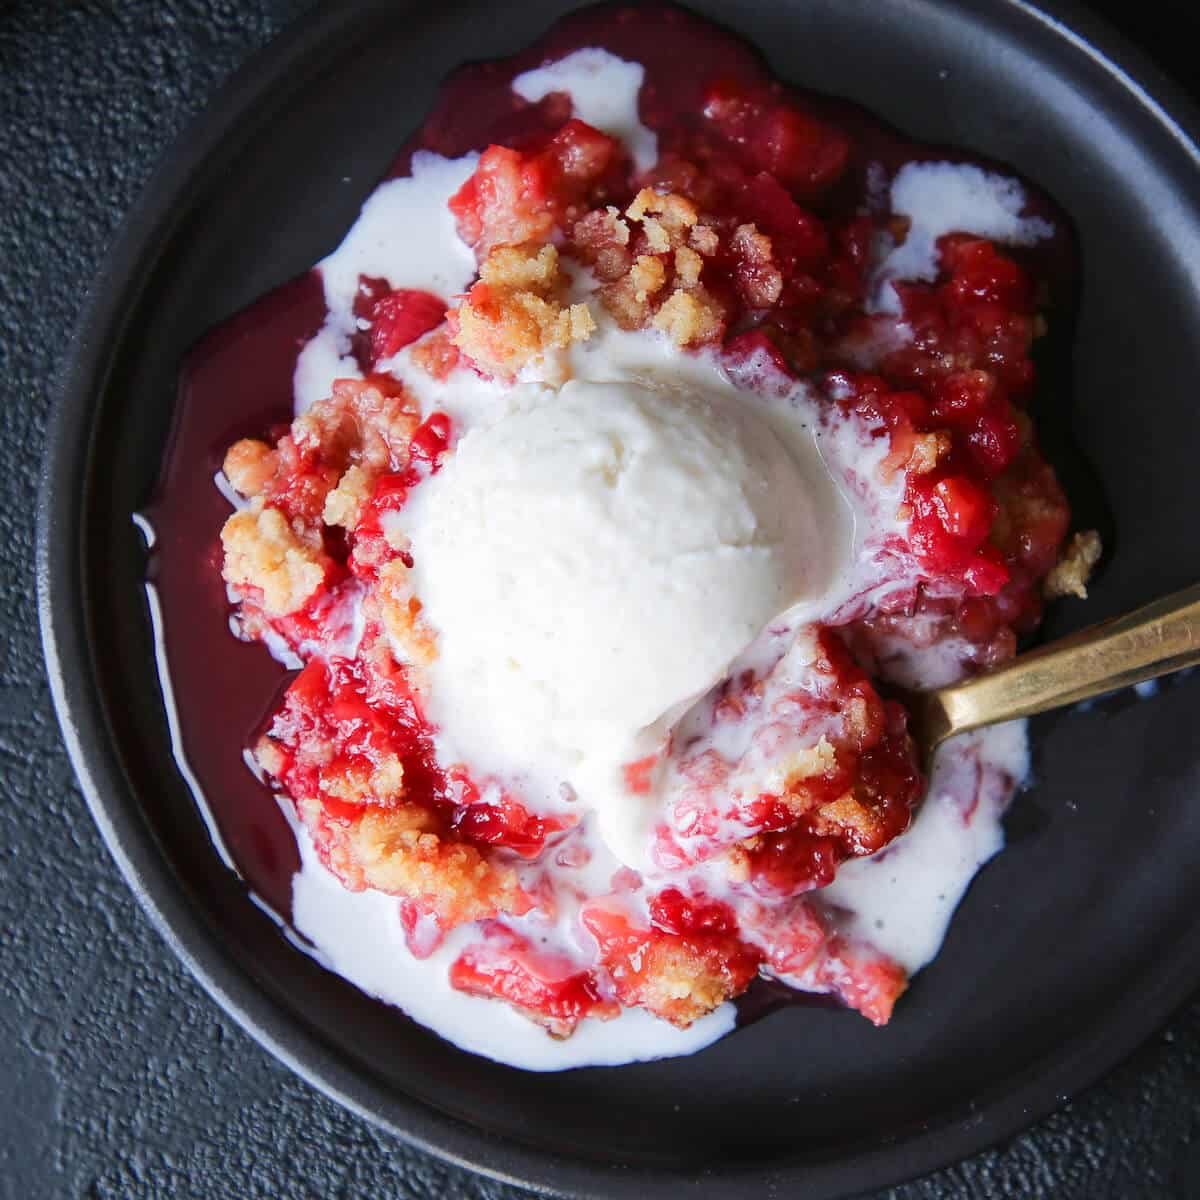 Grandmas Raspberry Rhubarb Crumble melted ice cream